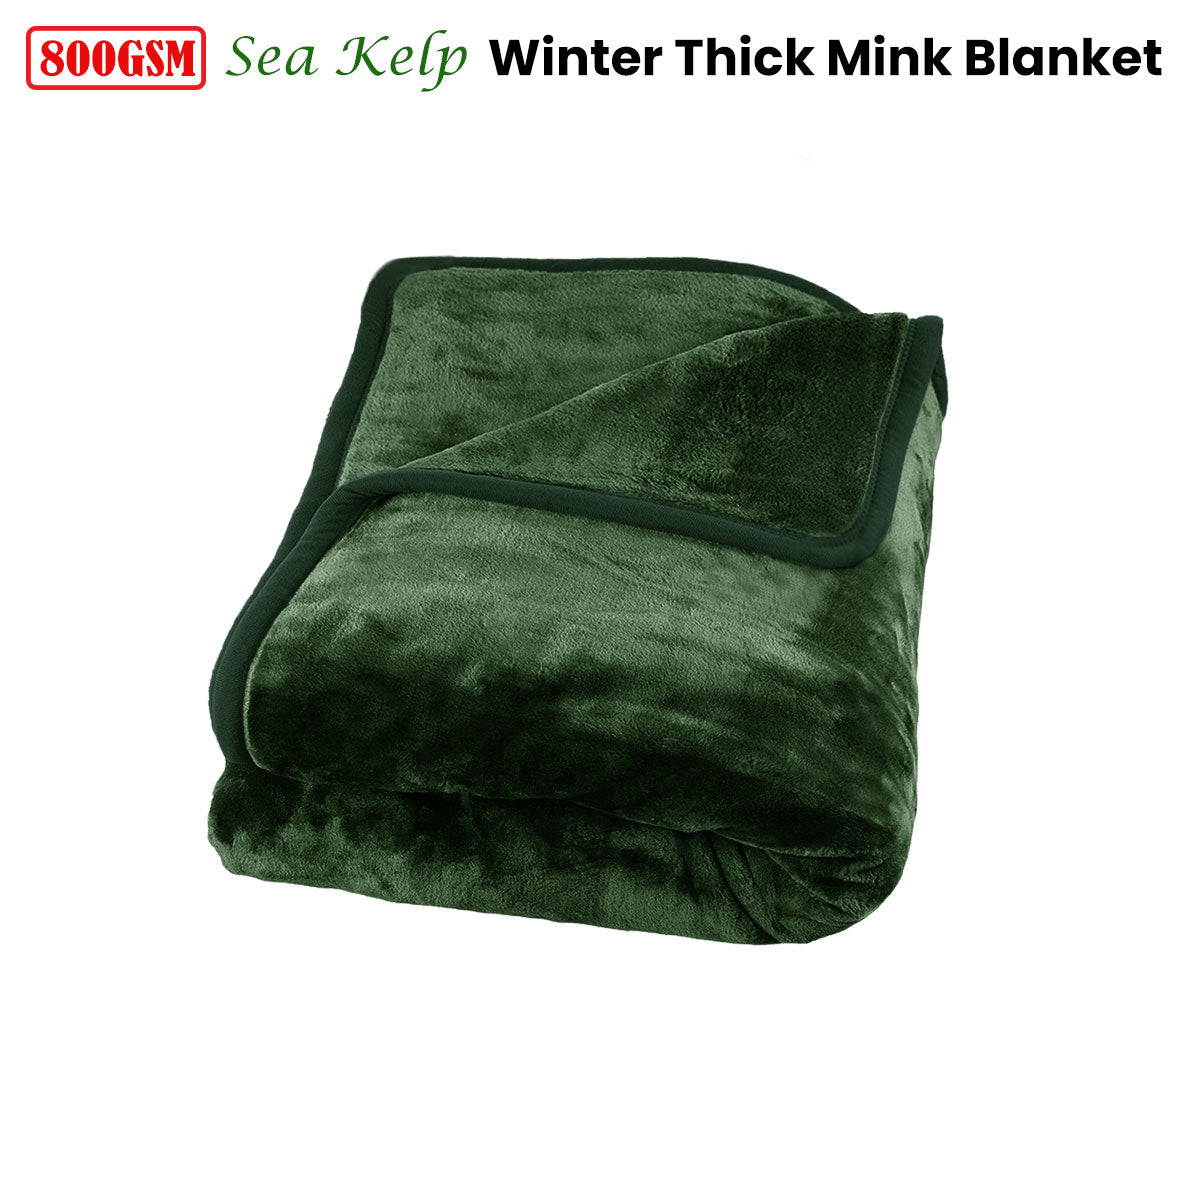 J Elliot Home 800GSM Luxury Winter Thick Mink Blanket Sea Kelp Queen